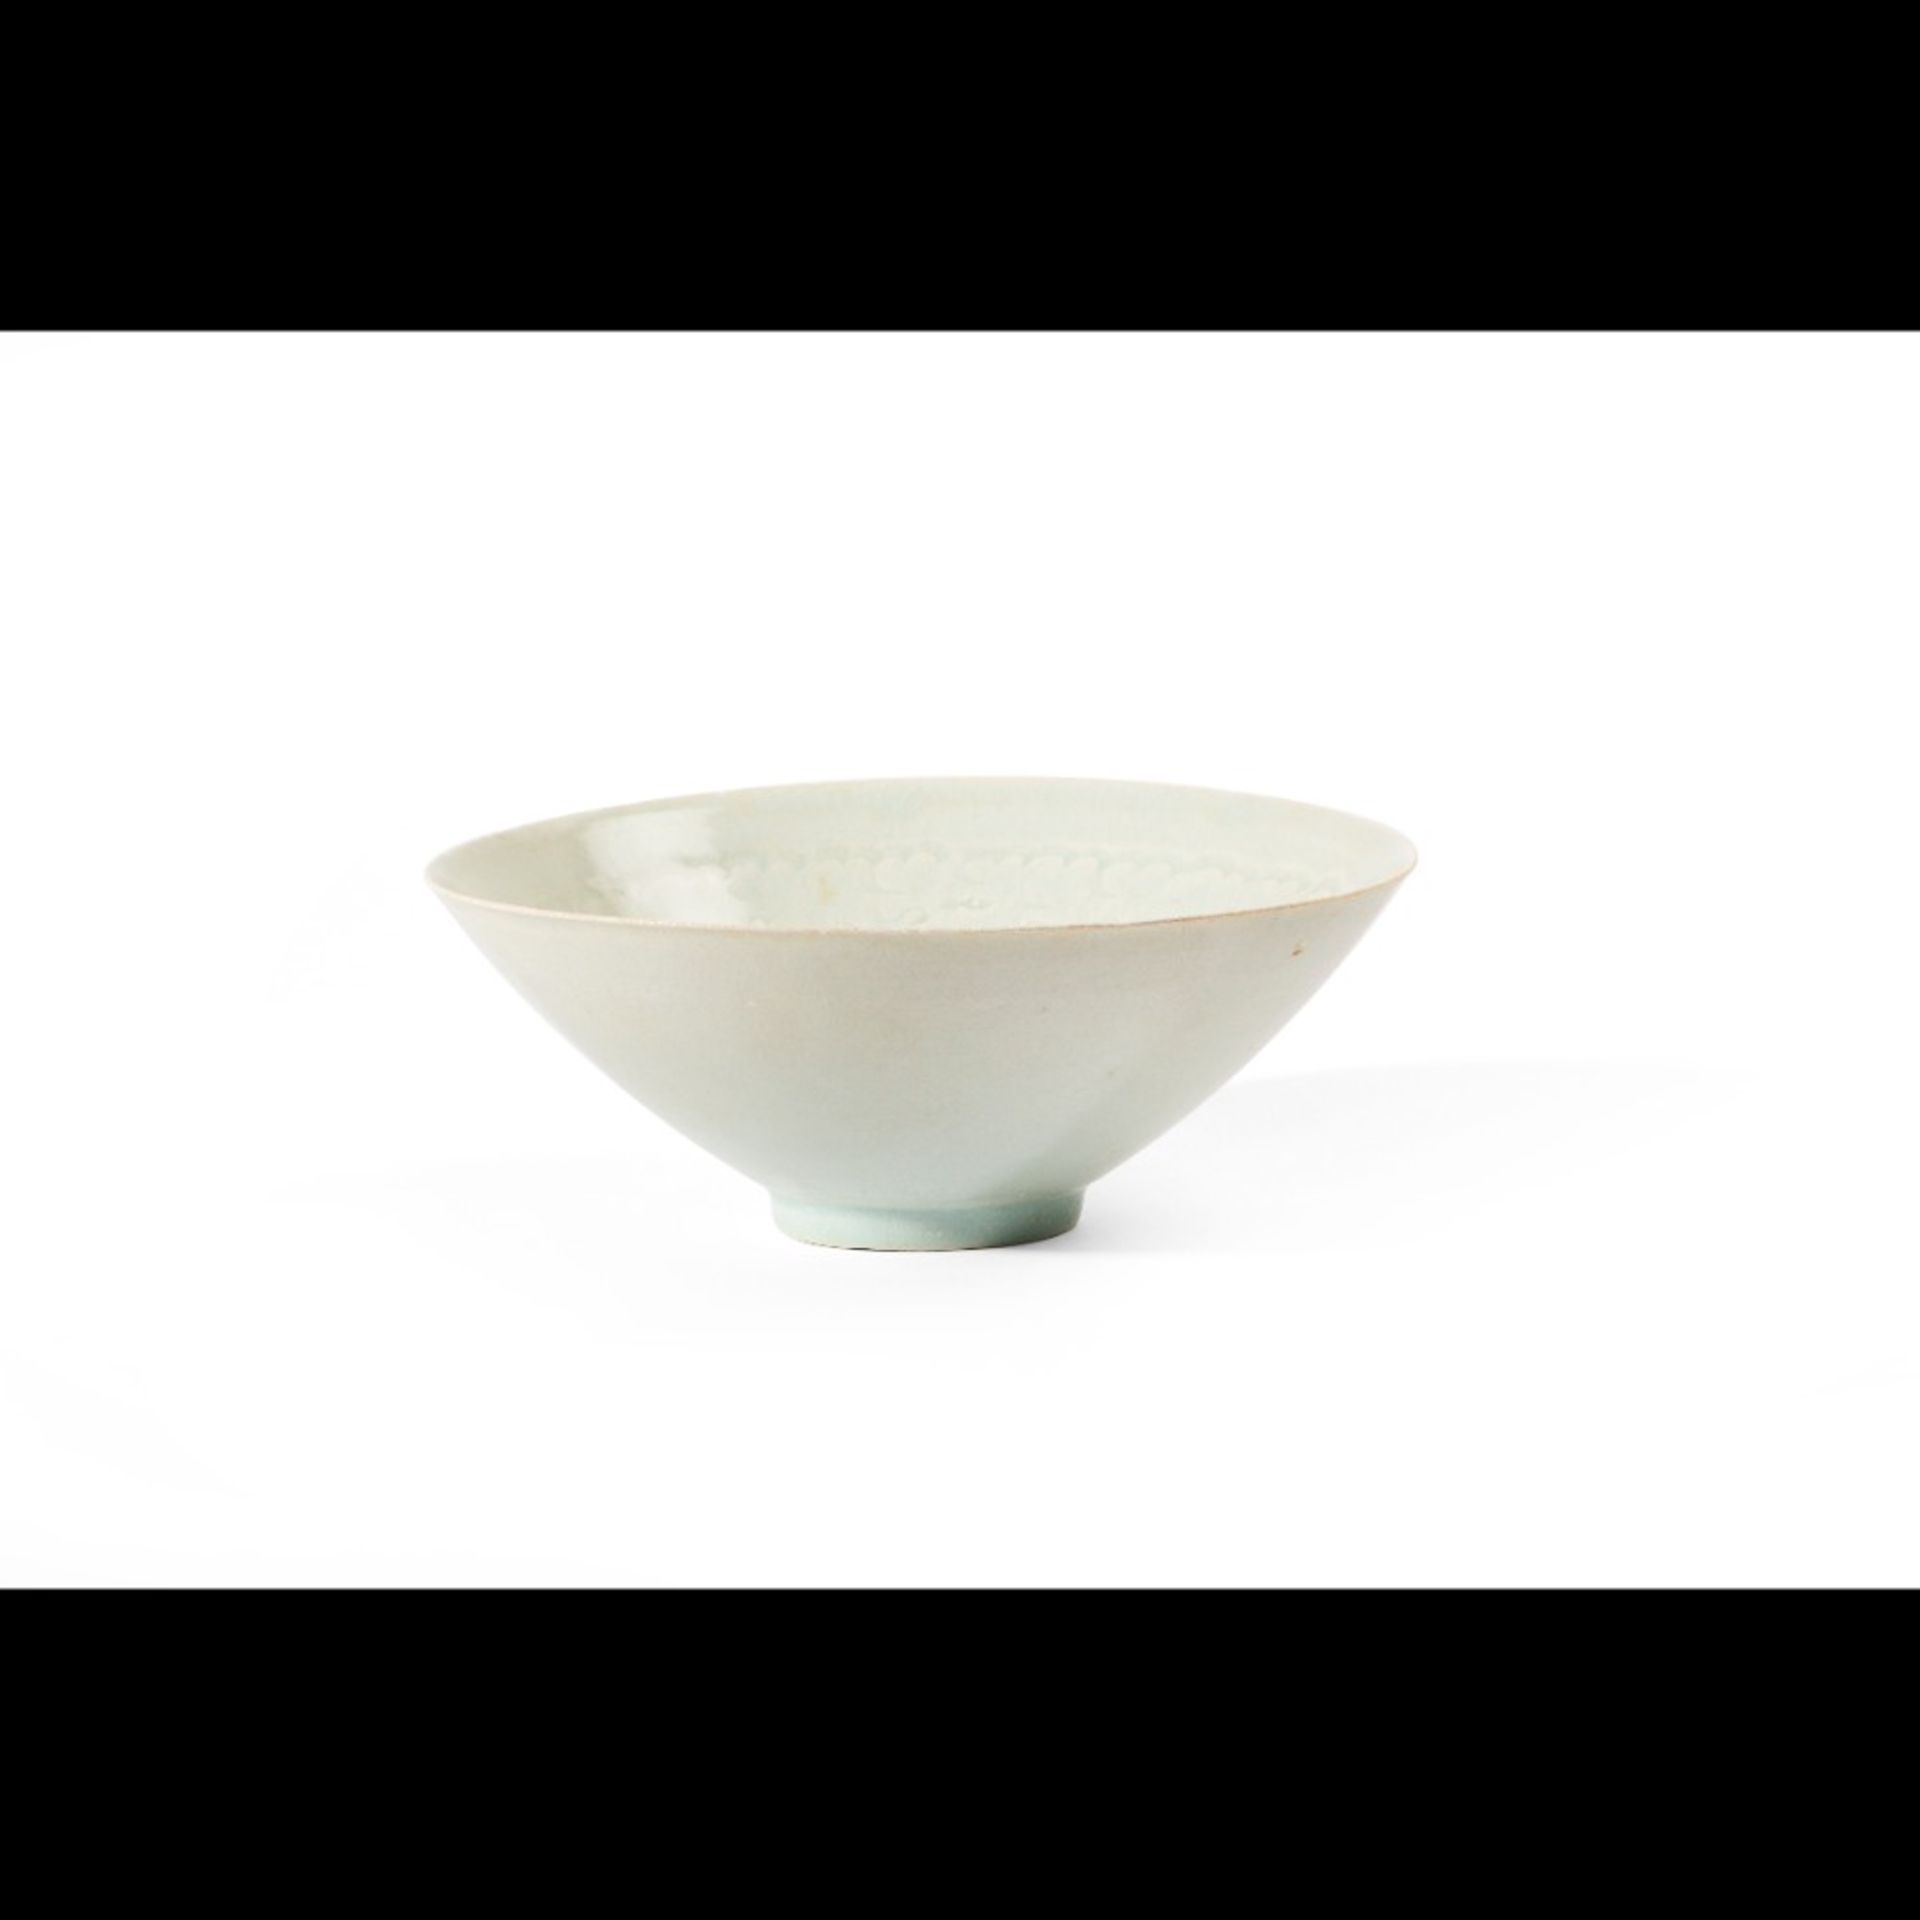  A Qingbai conical bowl